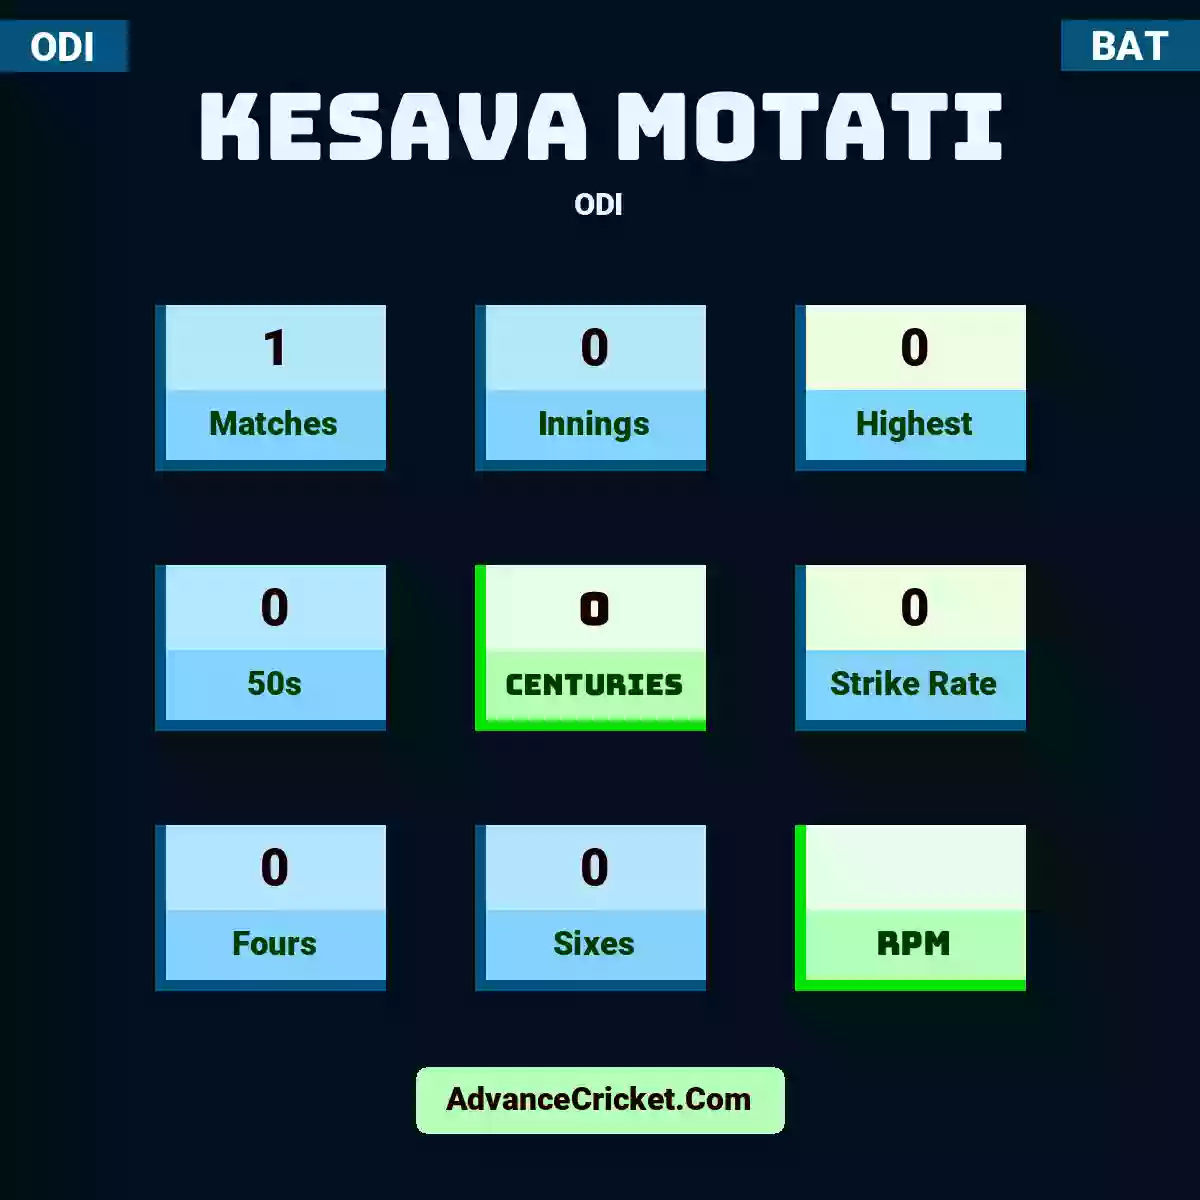 Kesava Motati ODI , Kesava Motati played 1 matches, scored 0 runs as highest, 0 half-centuries, and 0 centuries, with a strike rate of 0. K.Motati hit 0 fours and 0 sixes.